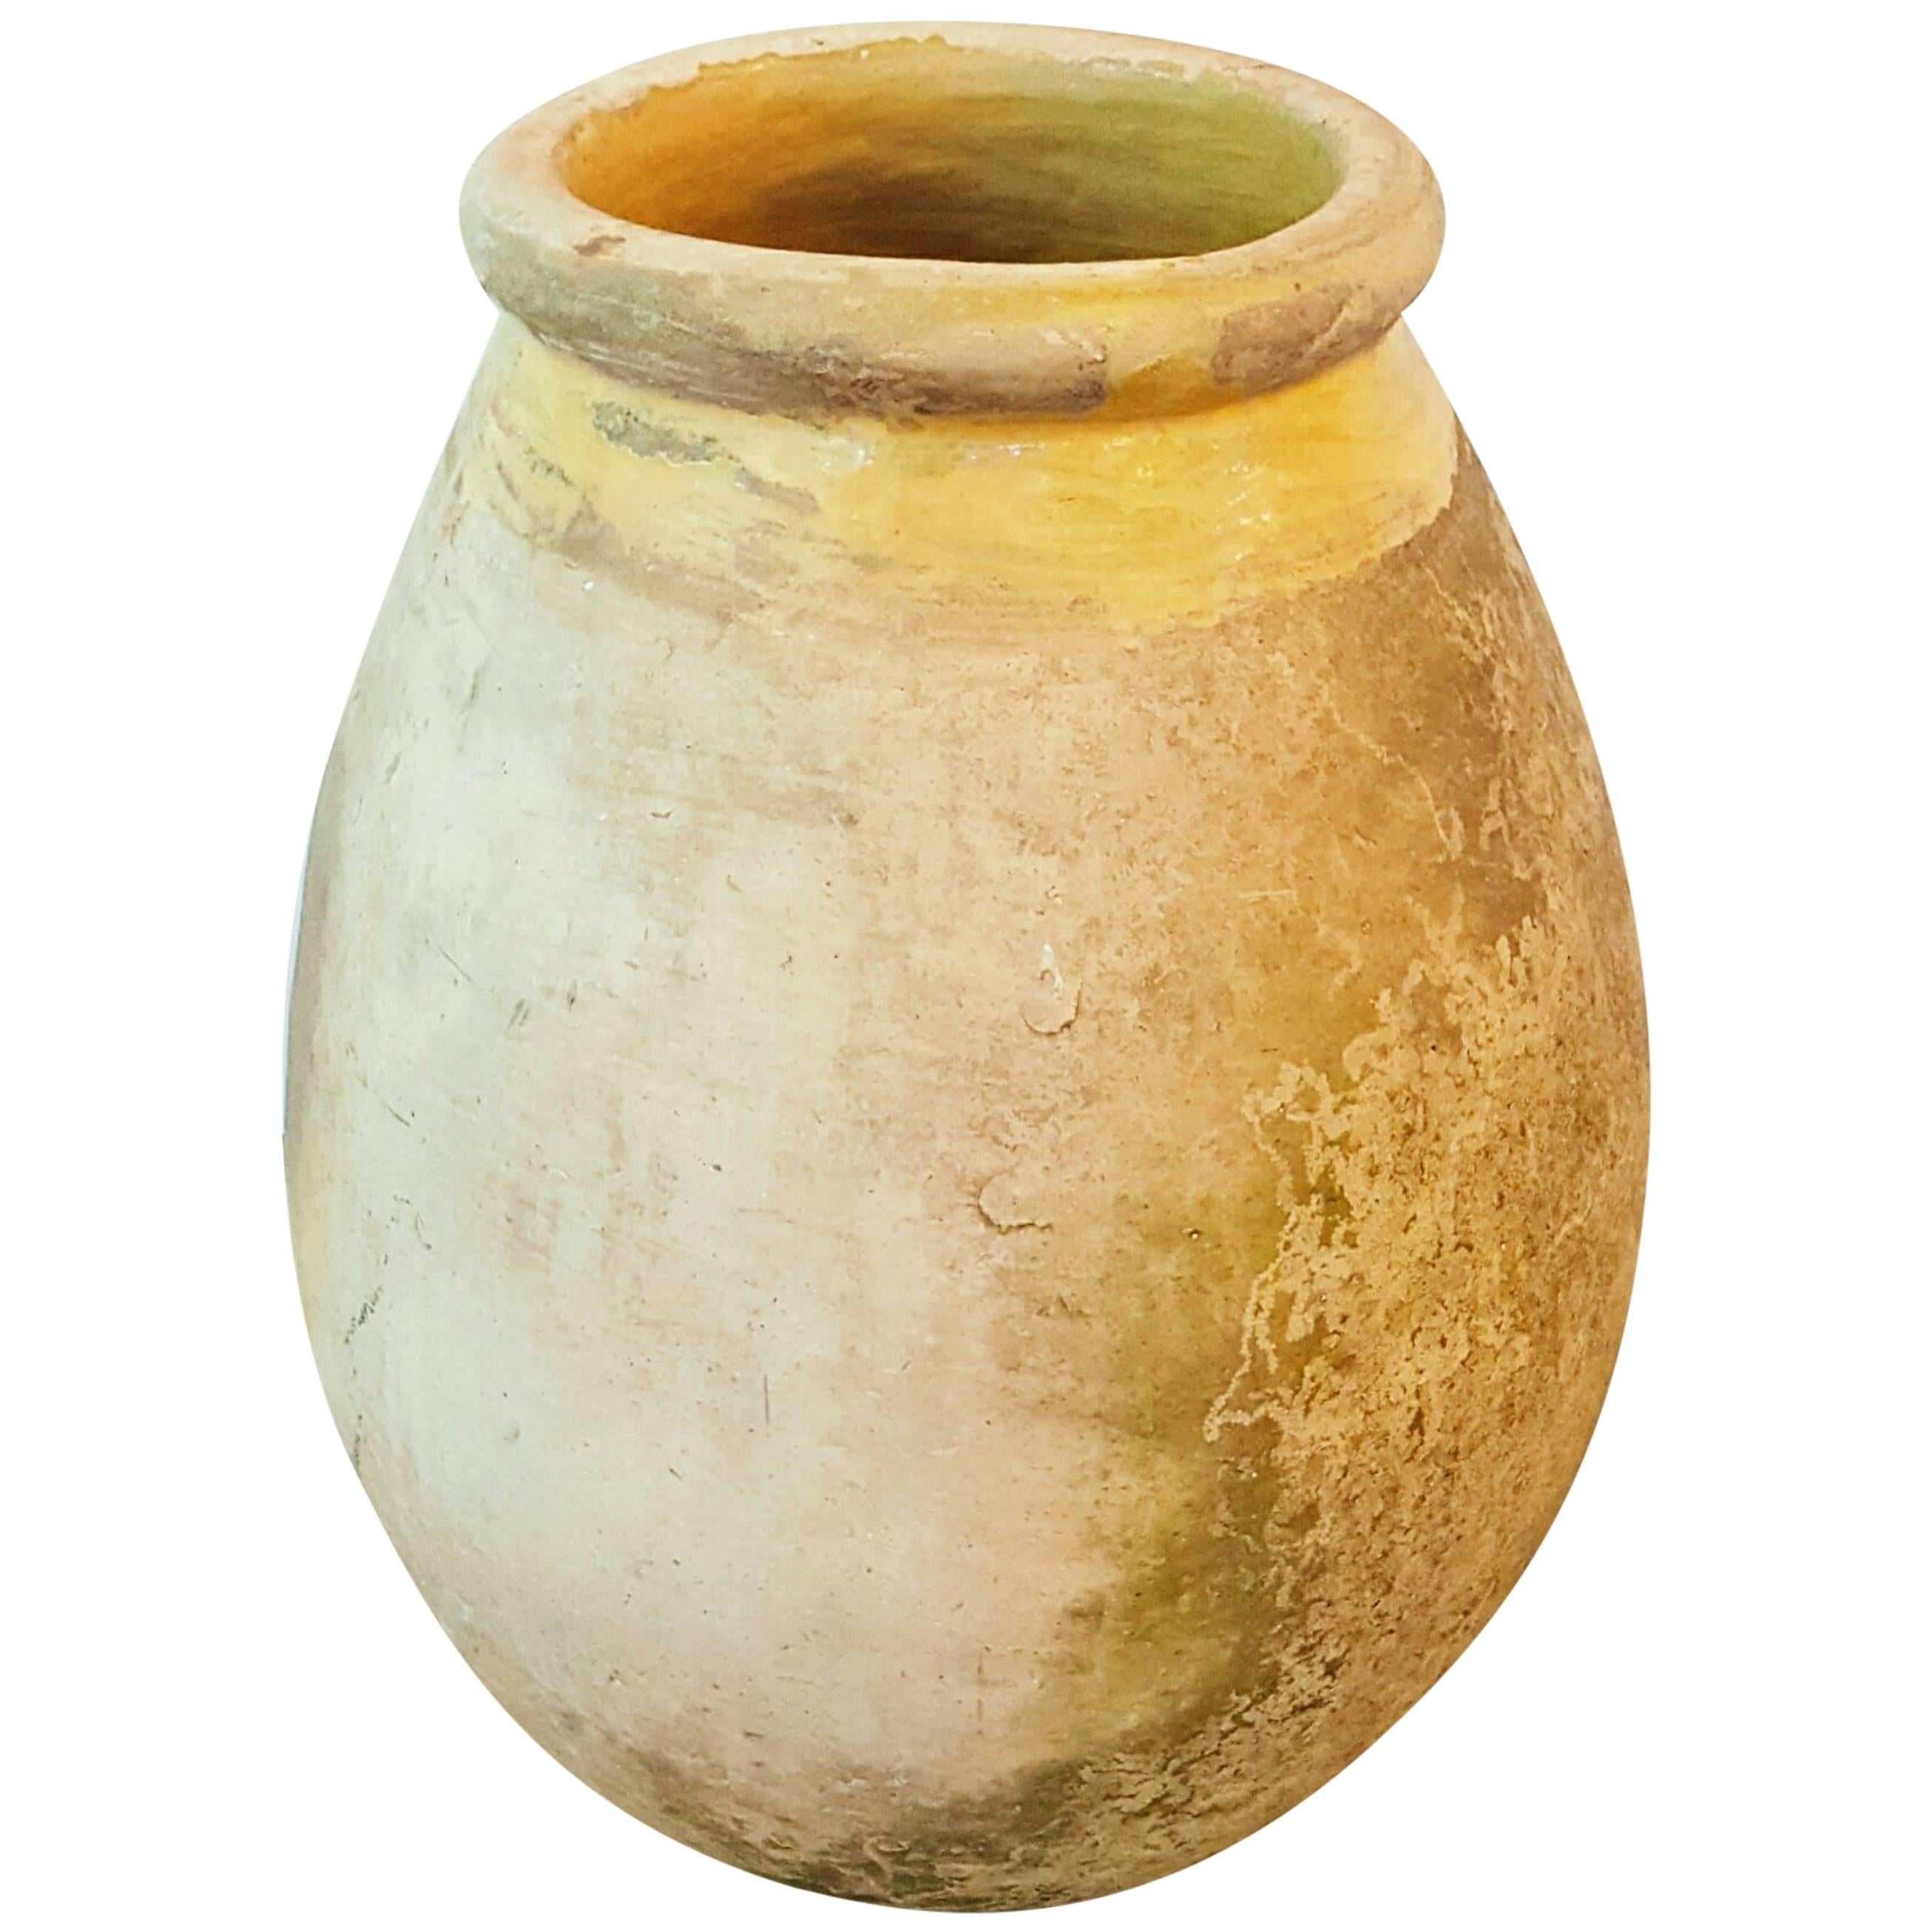 Very Large Size 18th Century Biot Ceramic Jar Made of Yellow Glazed Terracotta